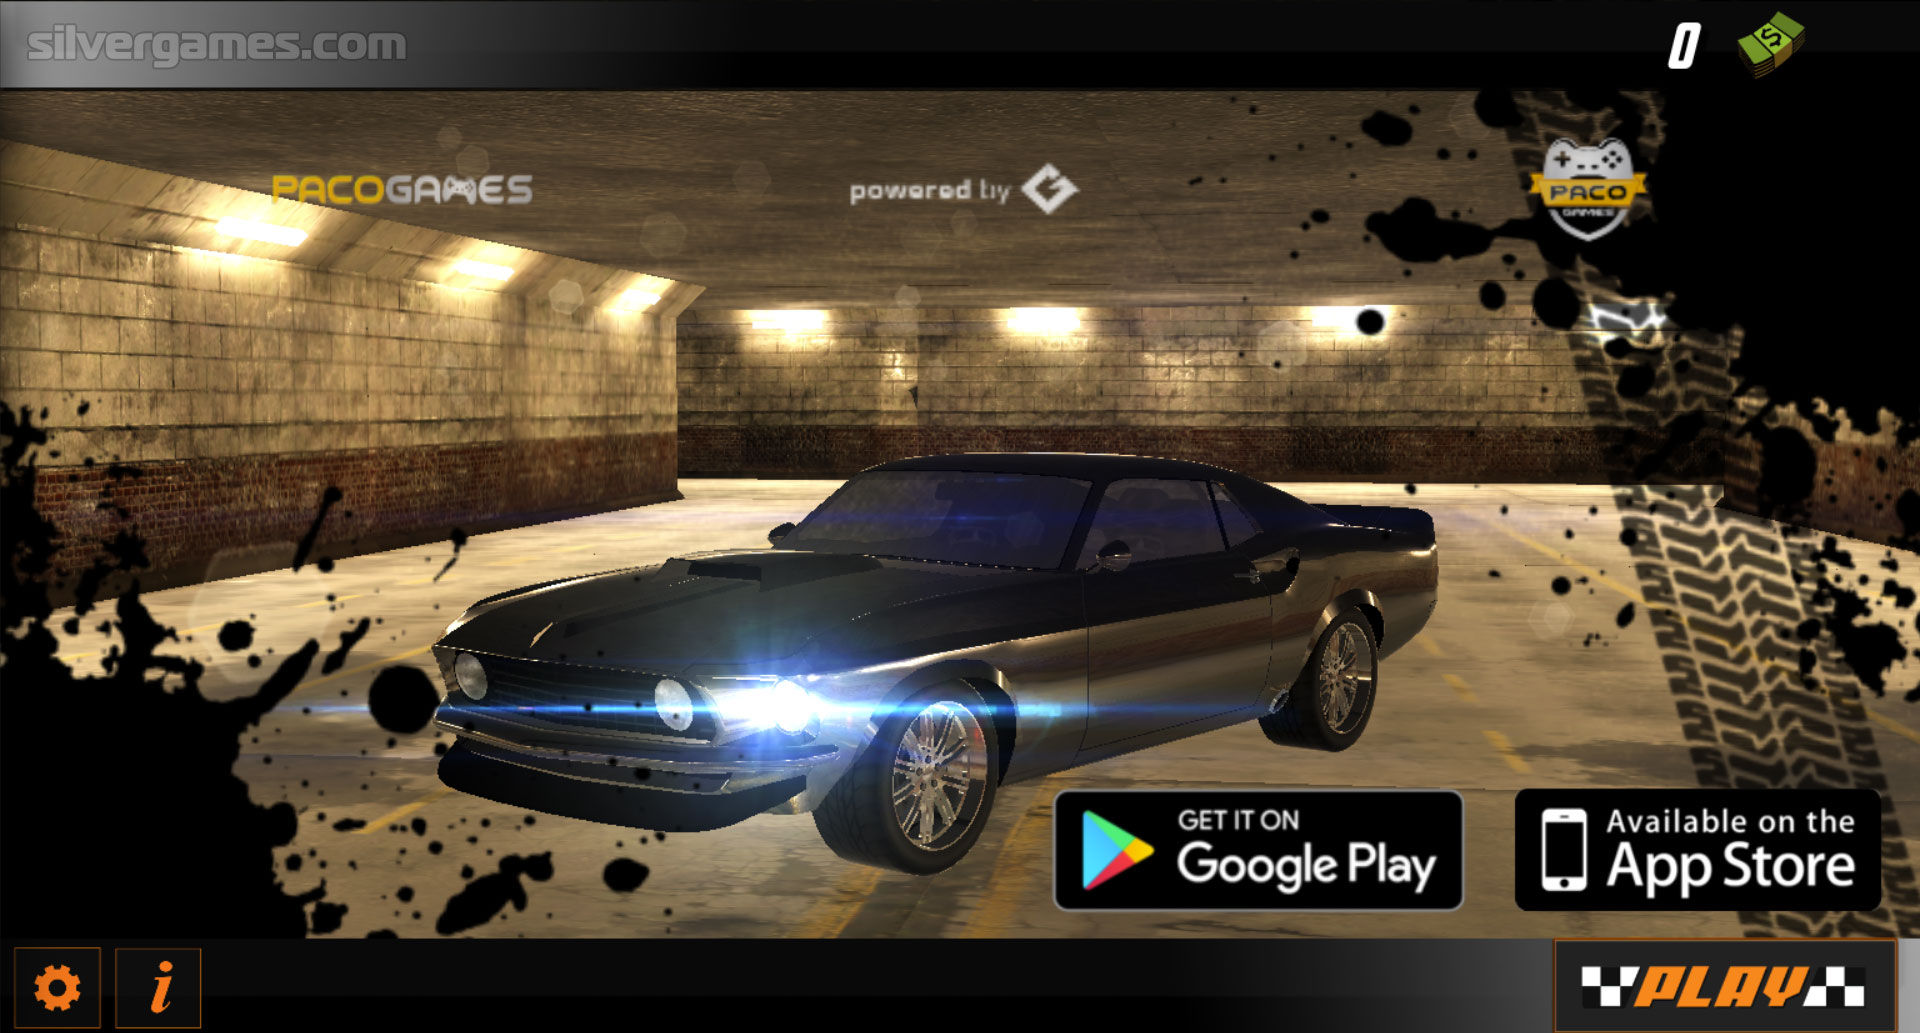 Burnout Drift 3 – Apps on Google Play